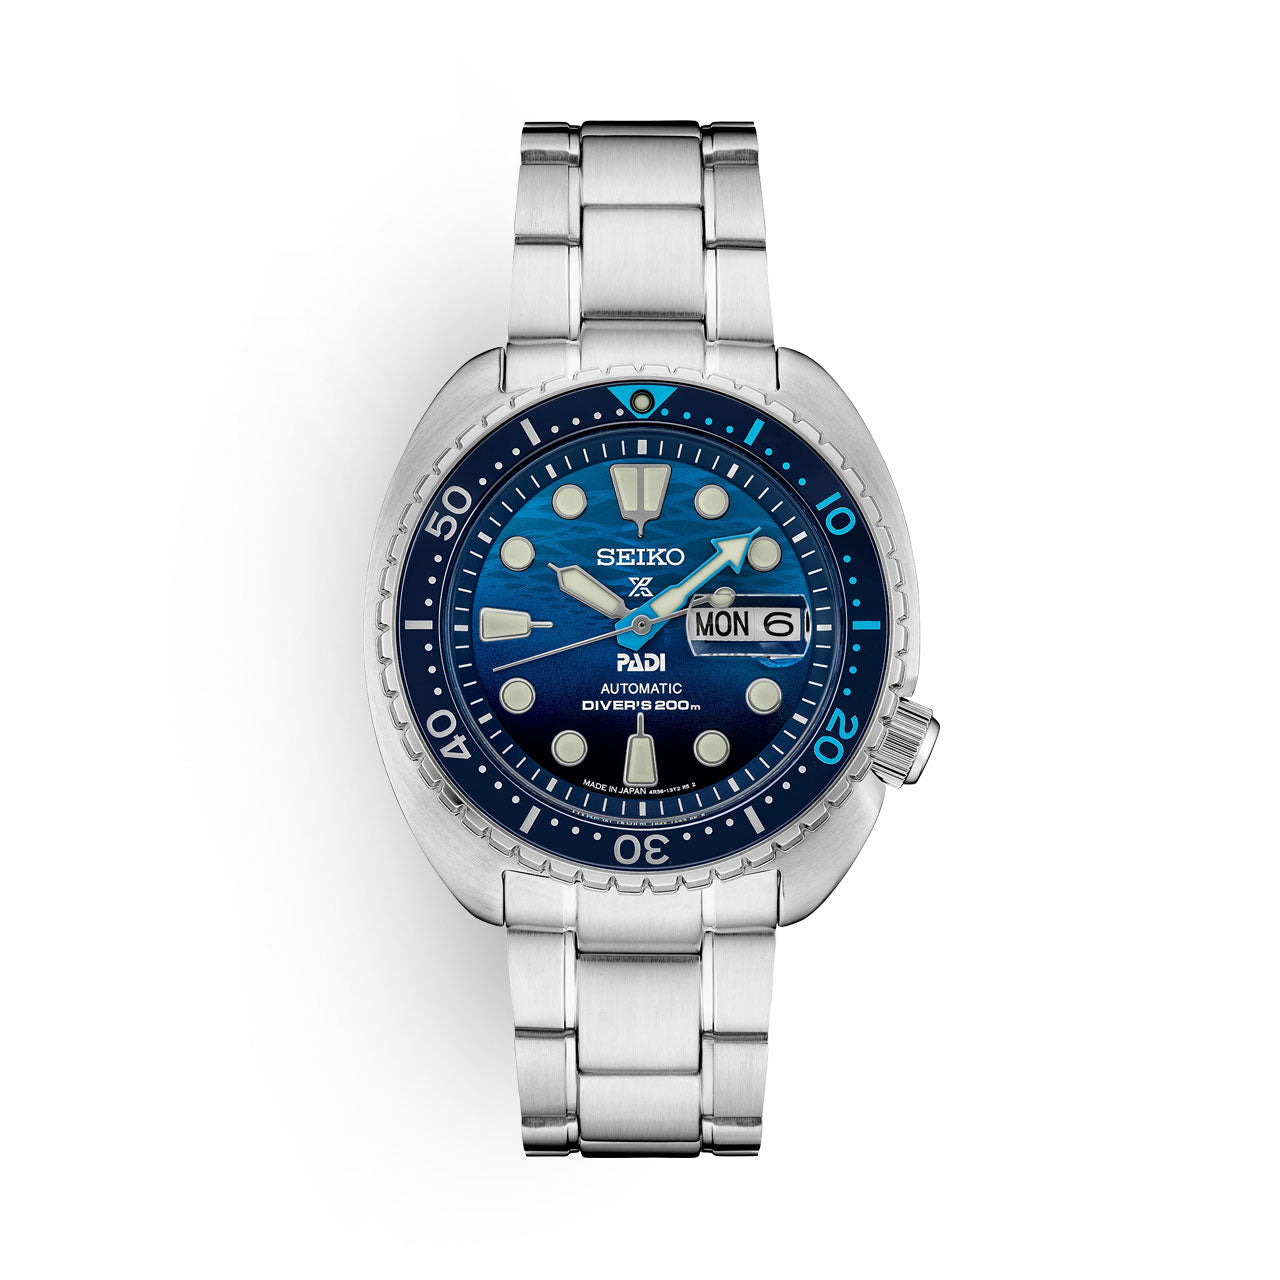 Часы для дайвинга Seiko Prospex SRPK01 PADI Special Edition